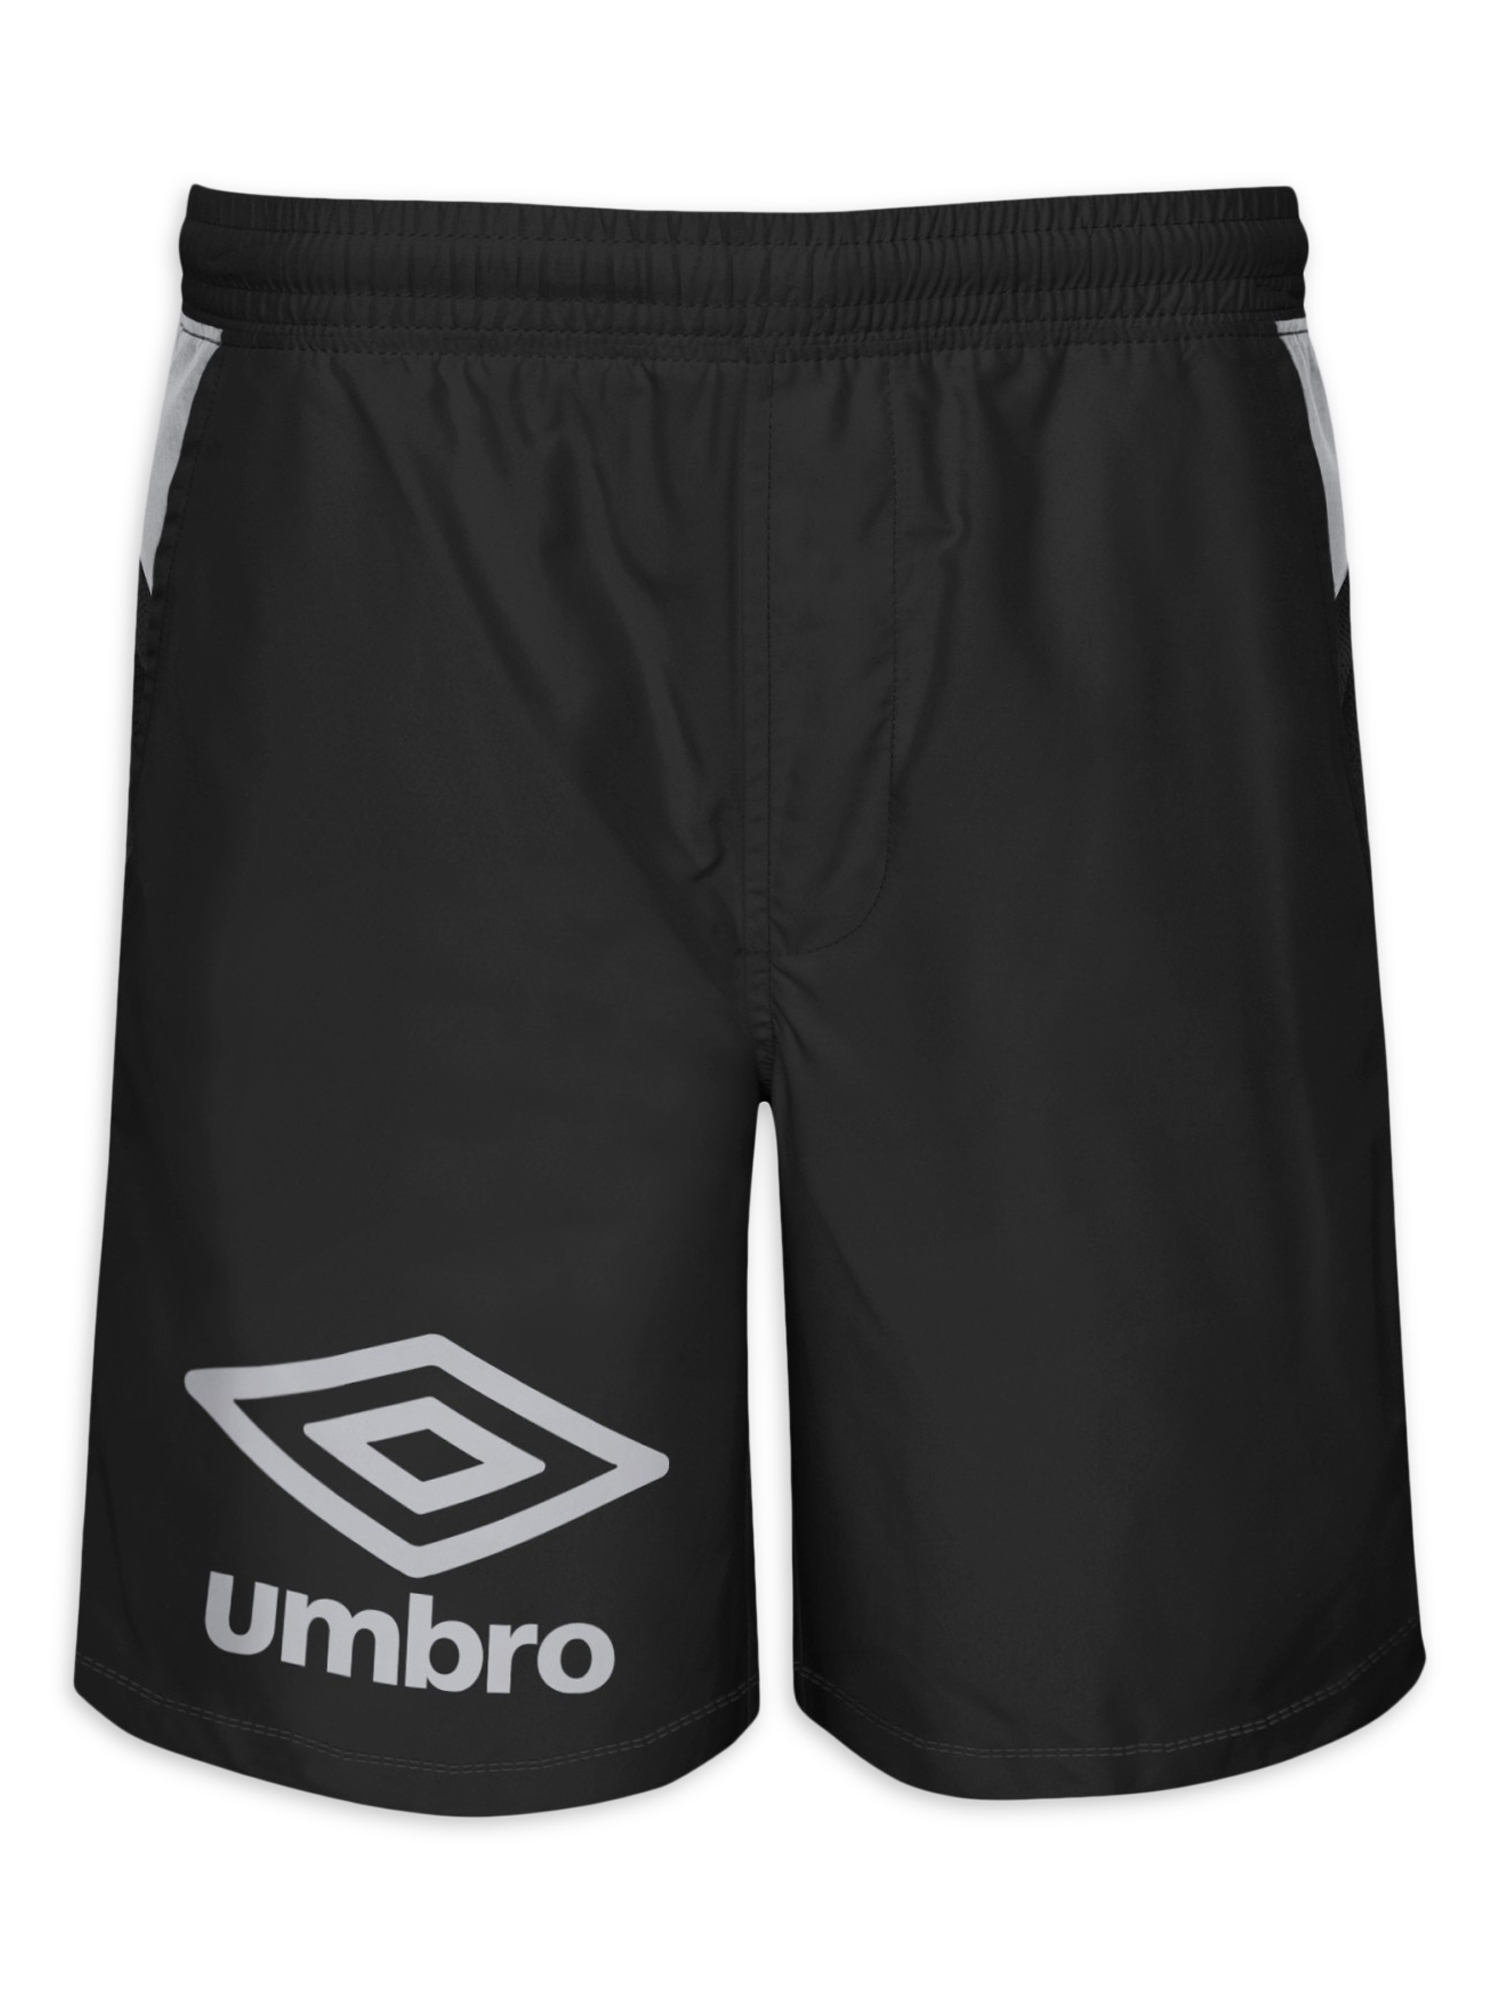 Umbro Boys Retro Diamond Soccer Jerseys and Shorts 4-Piece Outfit Set, Sizes 4-18 - image 5 of 9